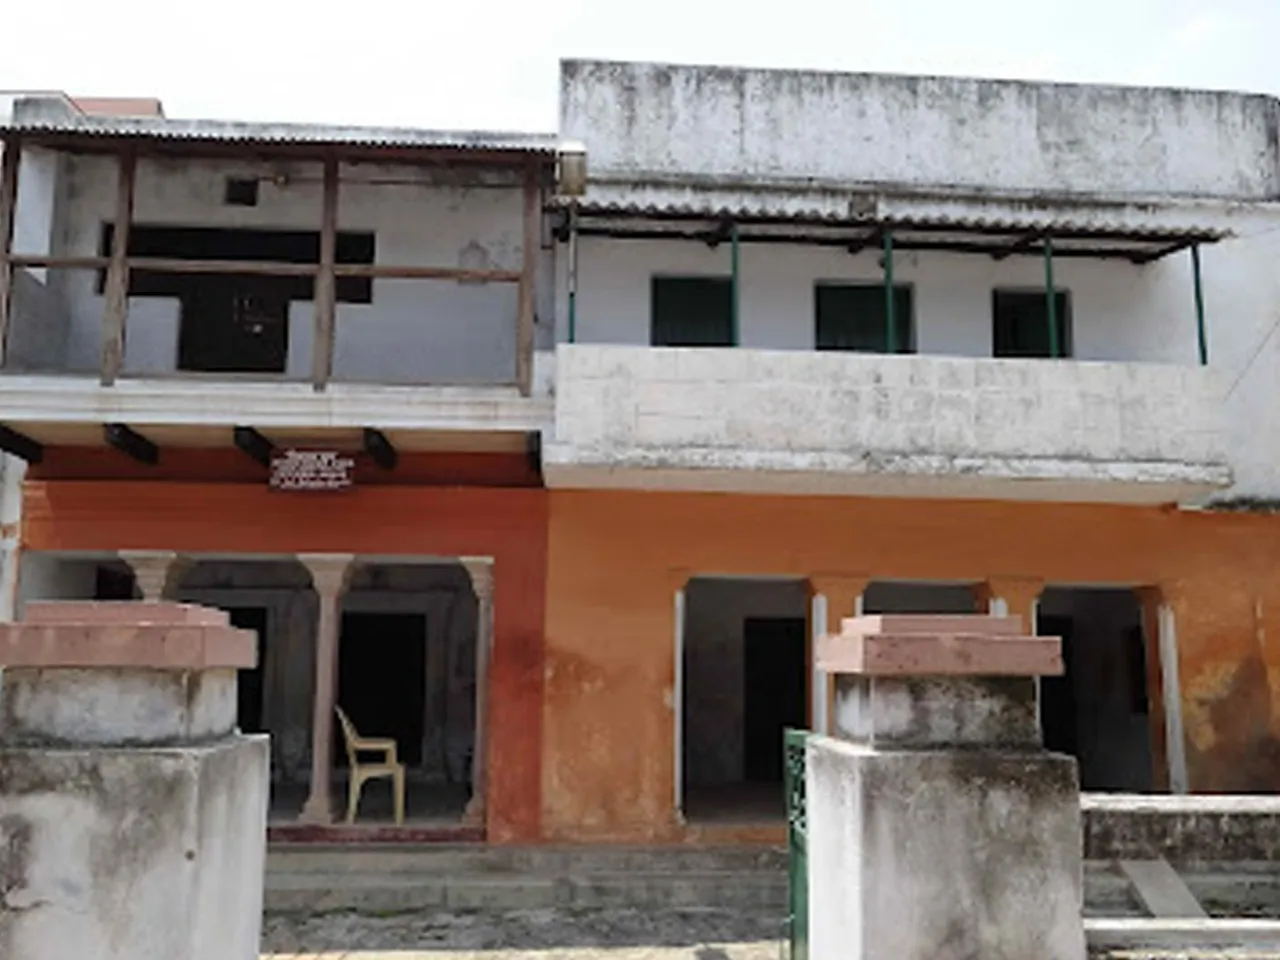 Lal Bahadur Shastri's Paternal Home in Varanasi is still in its glory!